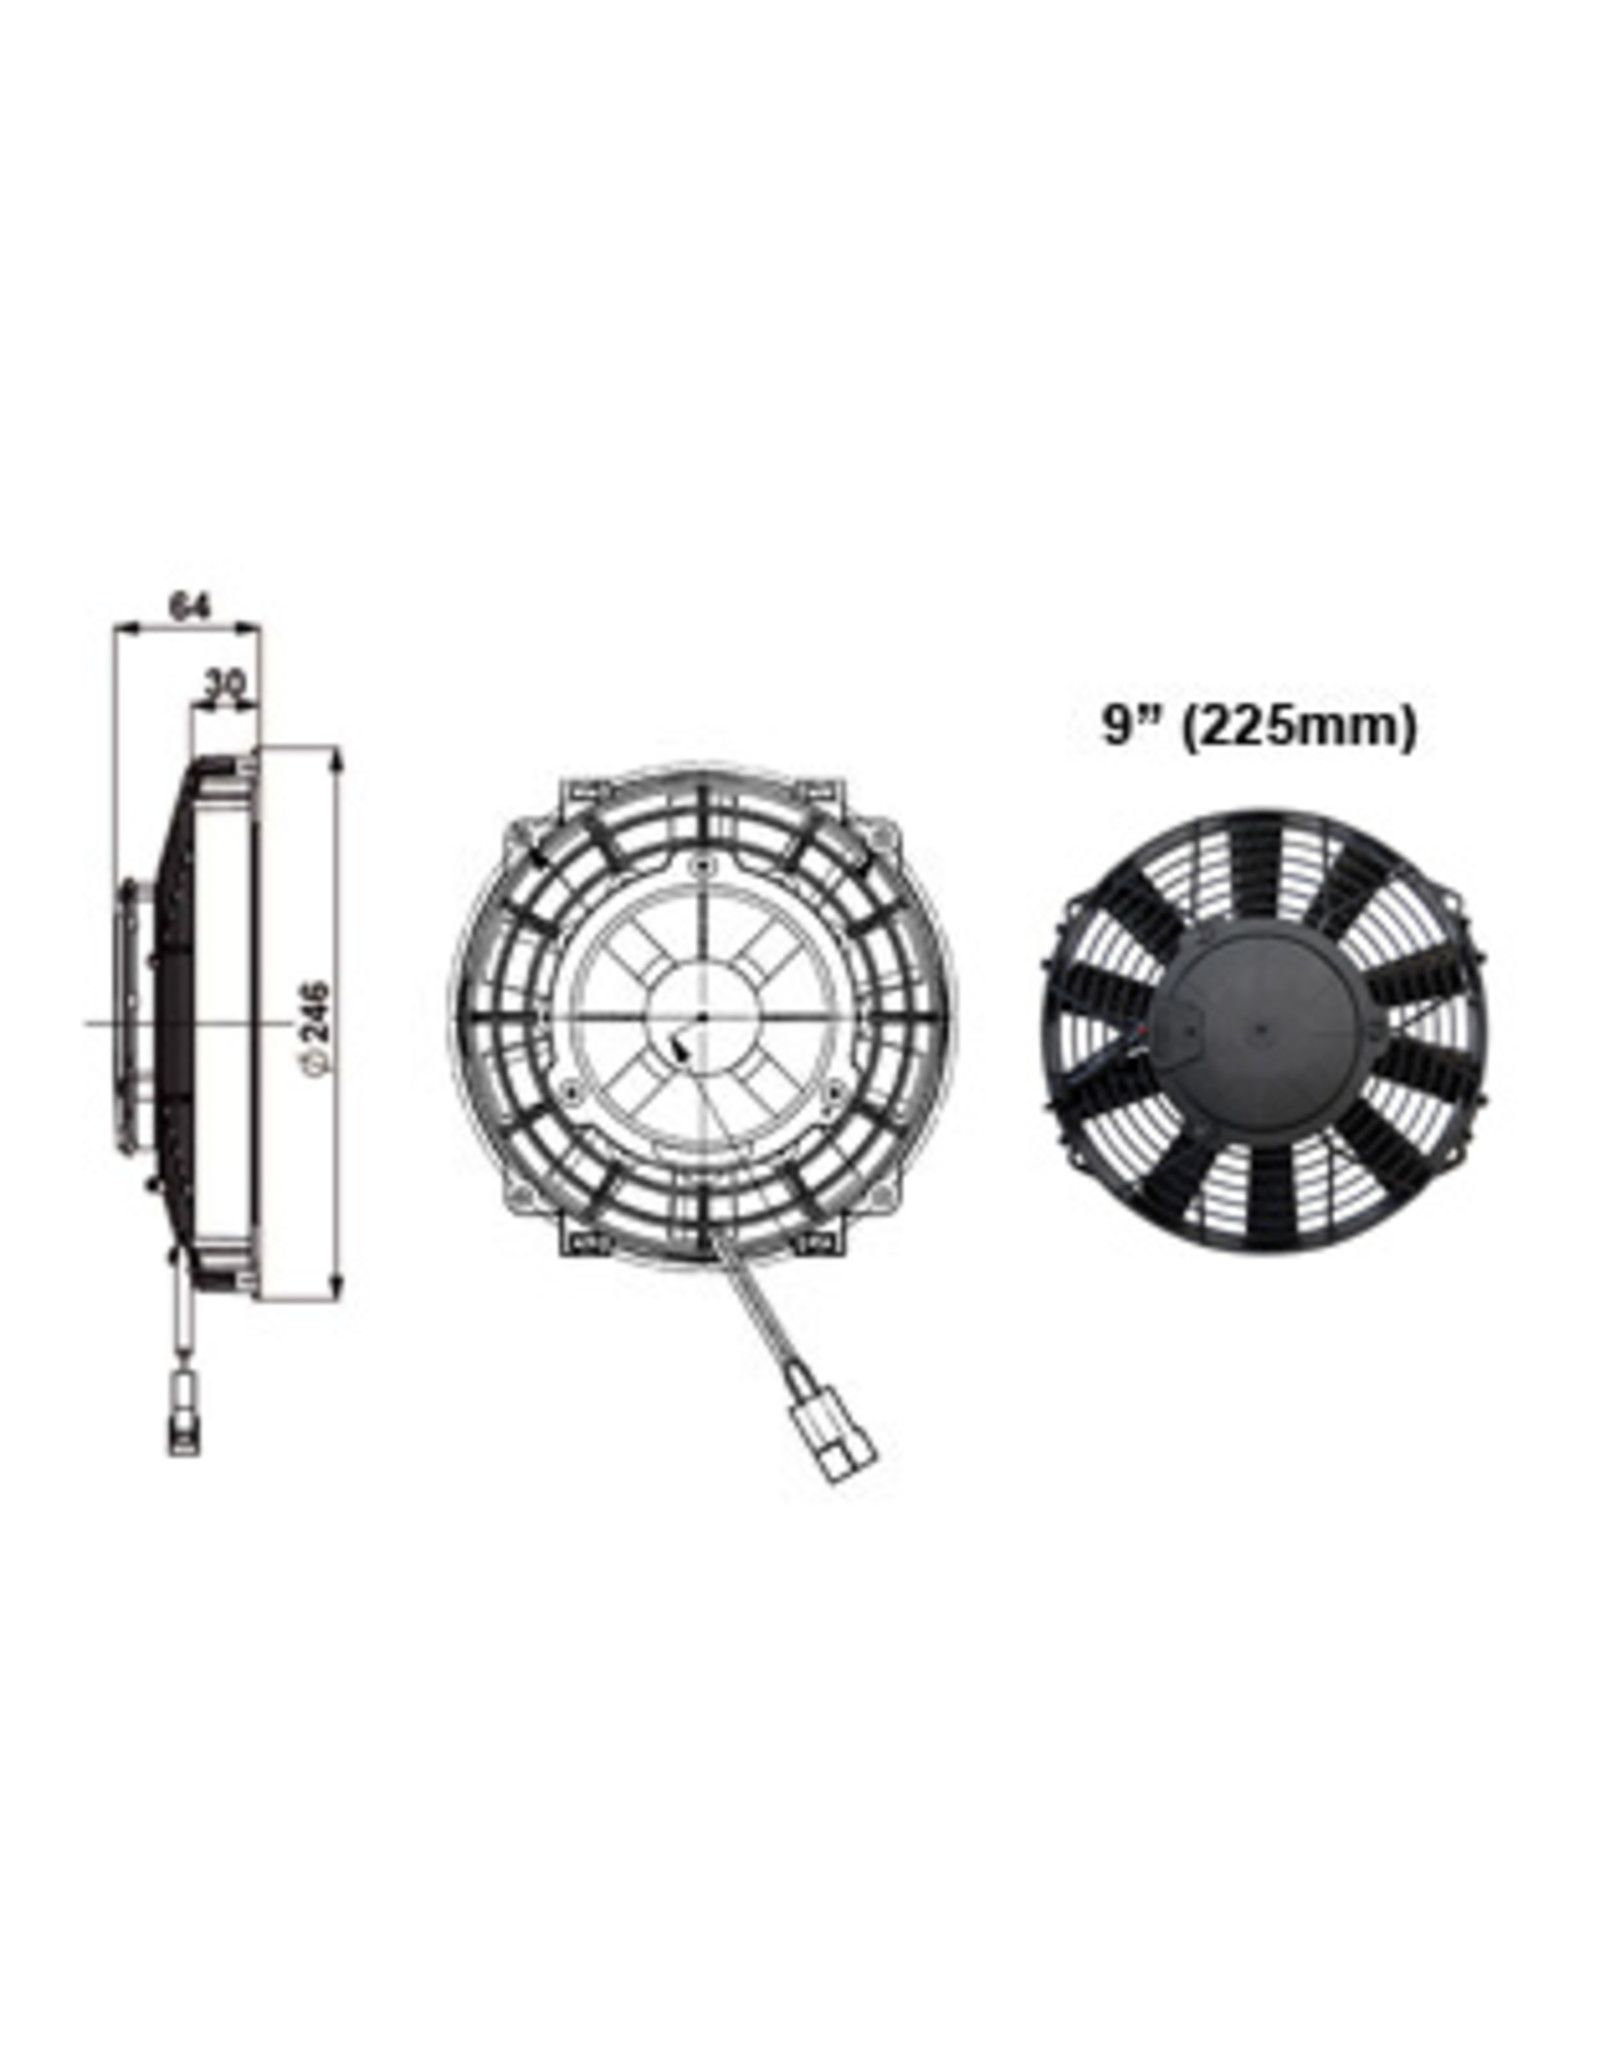 Comex Cooling Fan 9" (225mm) Puller/Sucker